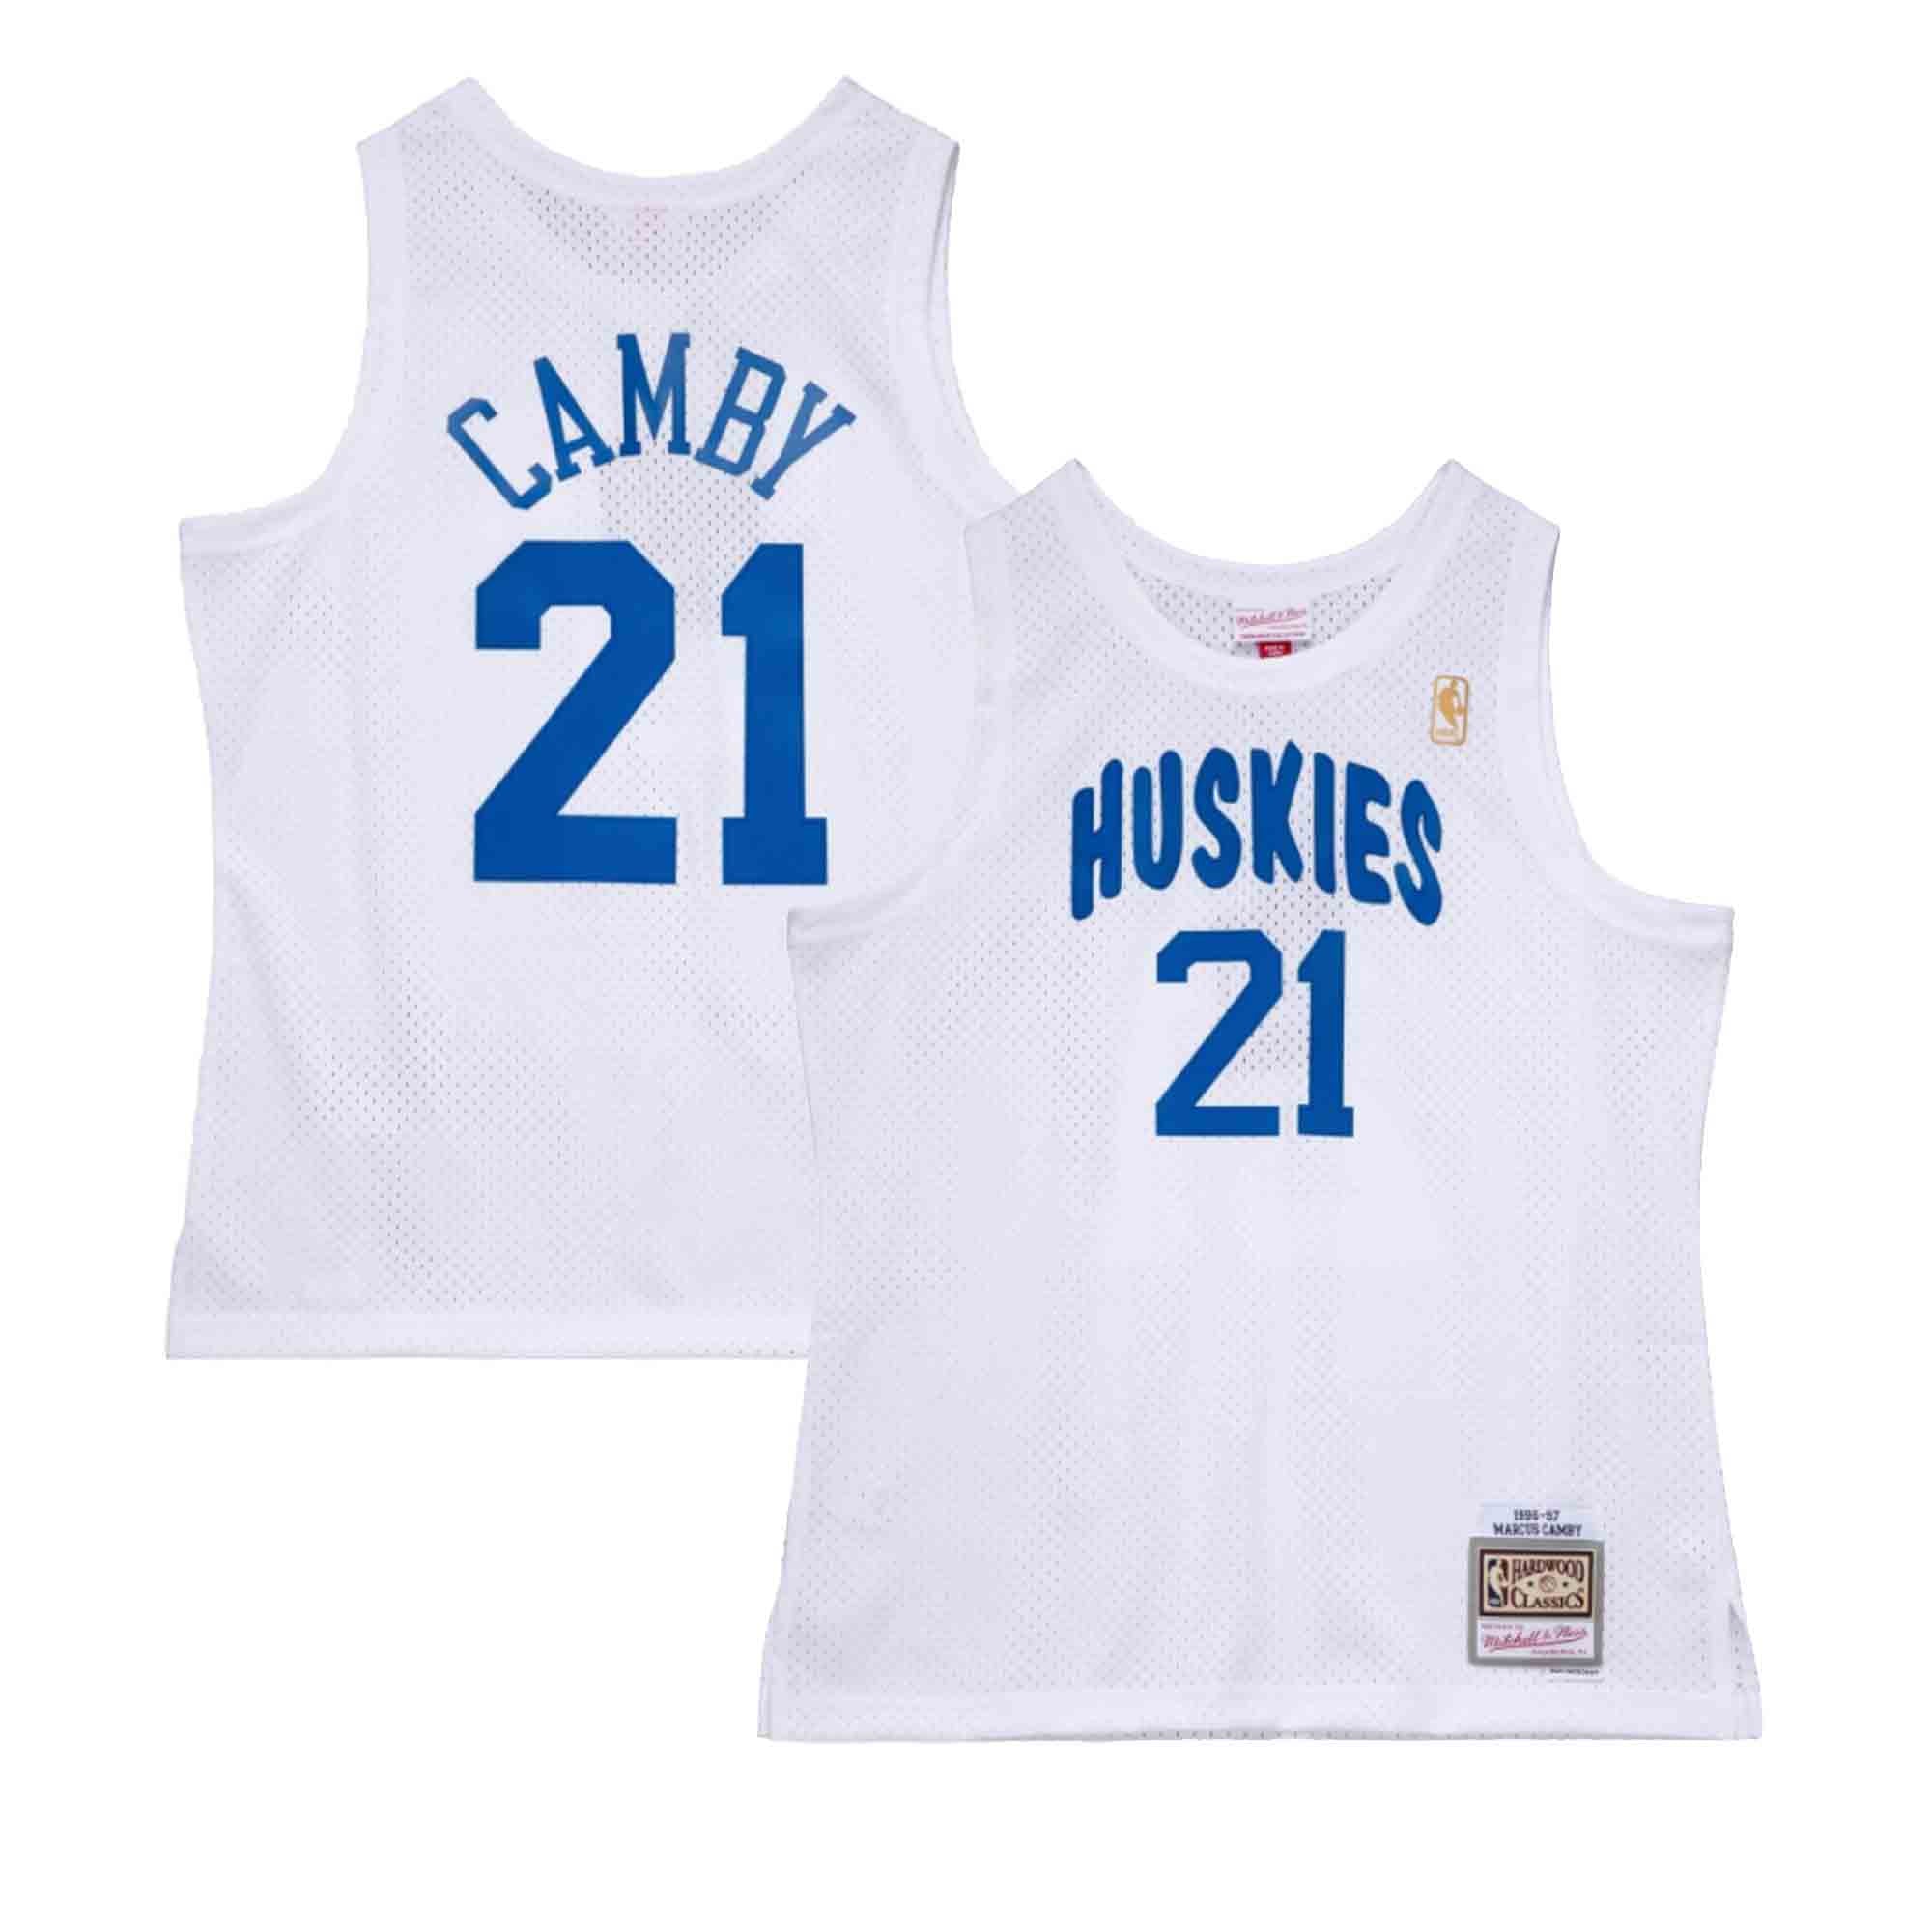 NBA Swingman Jersey Toronto Raptors 1998-99 Marcus Camby #21